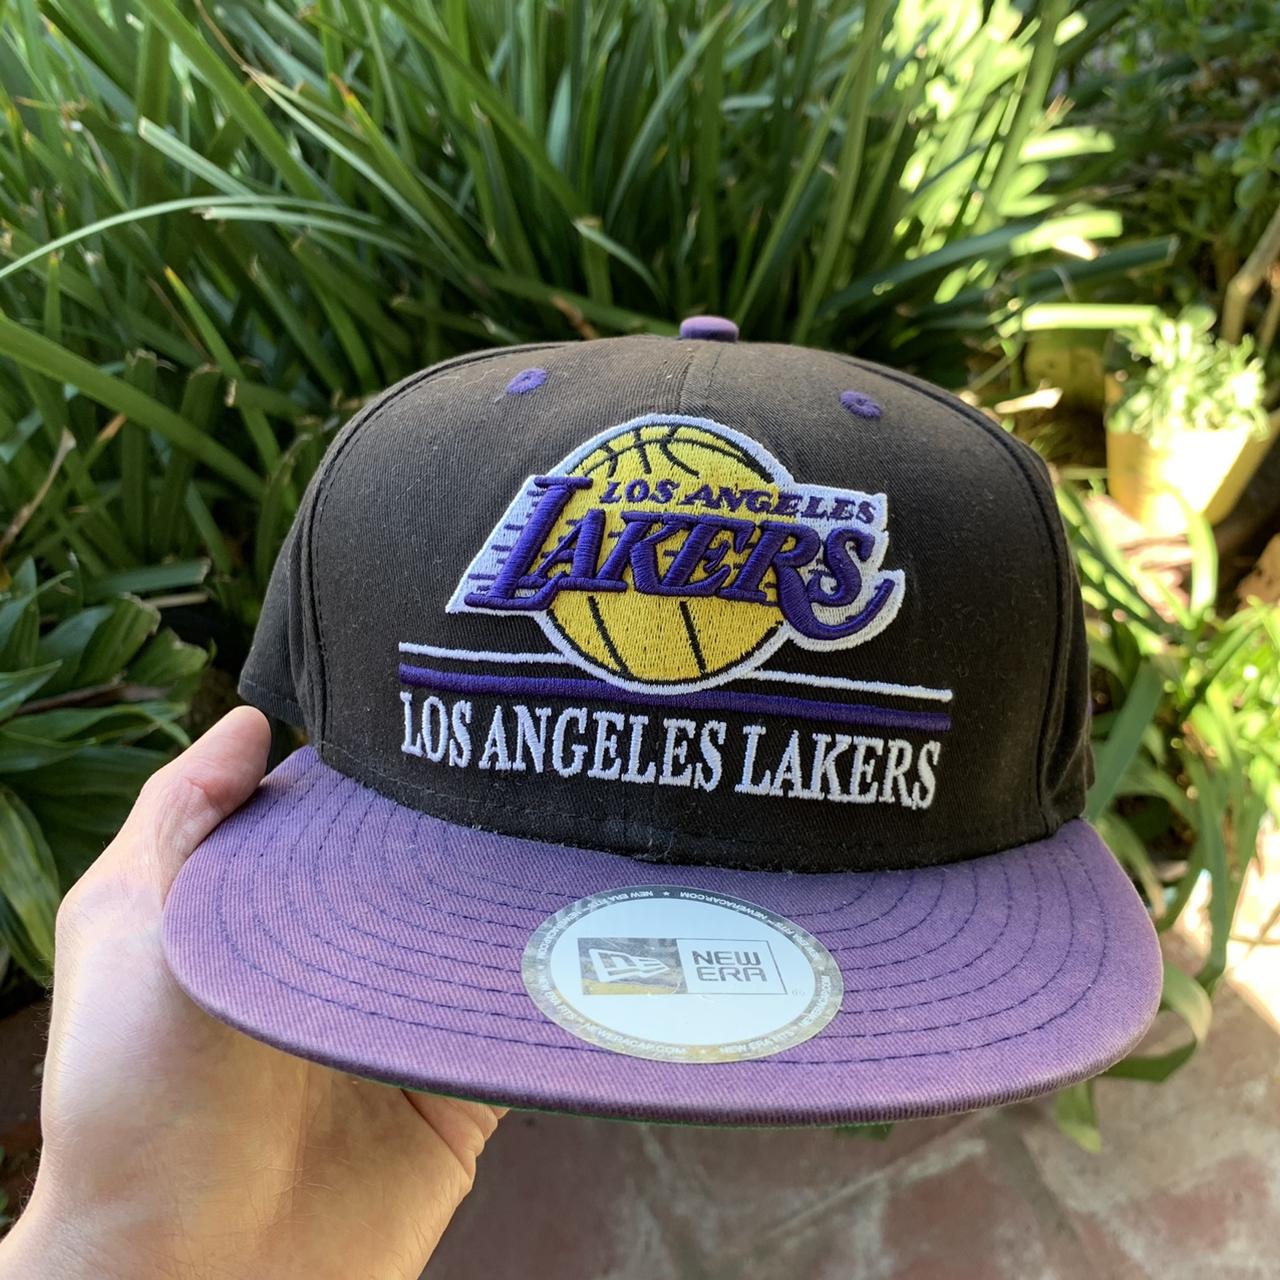 New Era Men's New Era Purple Los Angeles Lakers Hoodie Sleeveless T-Shirt